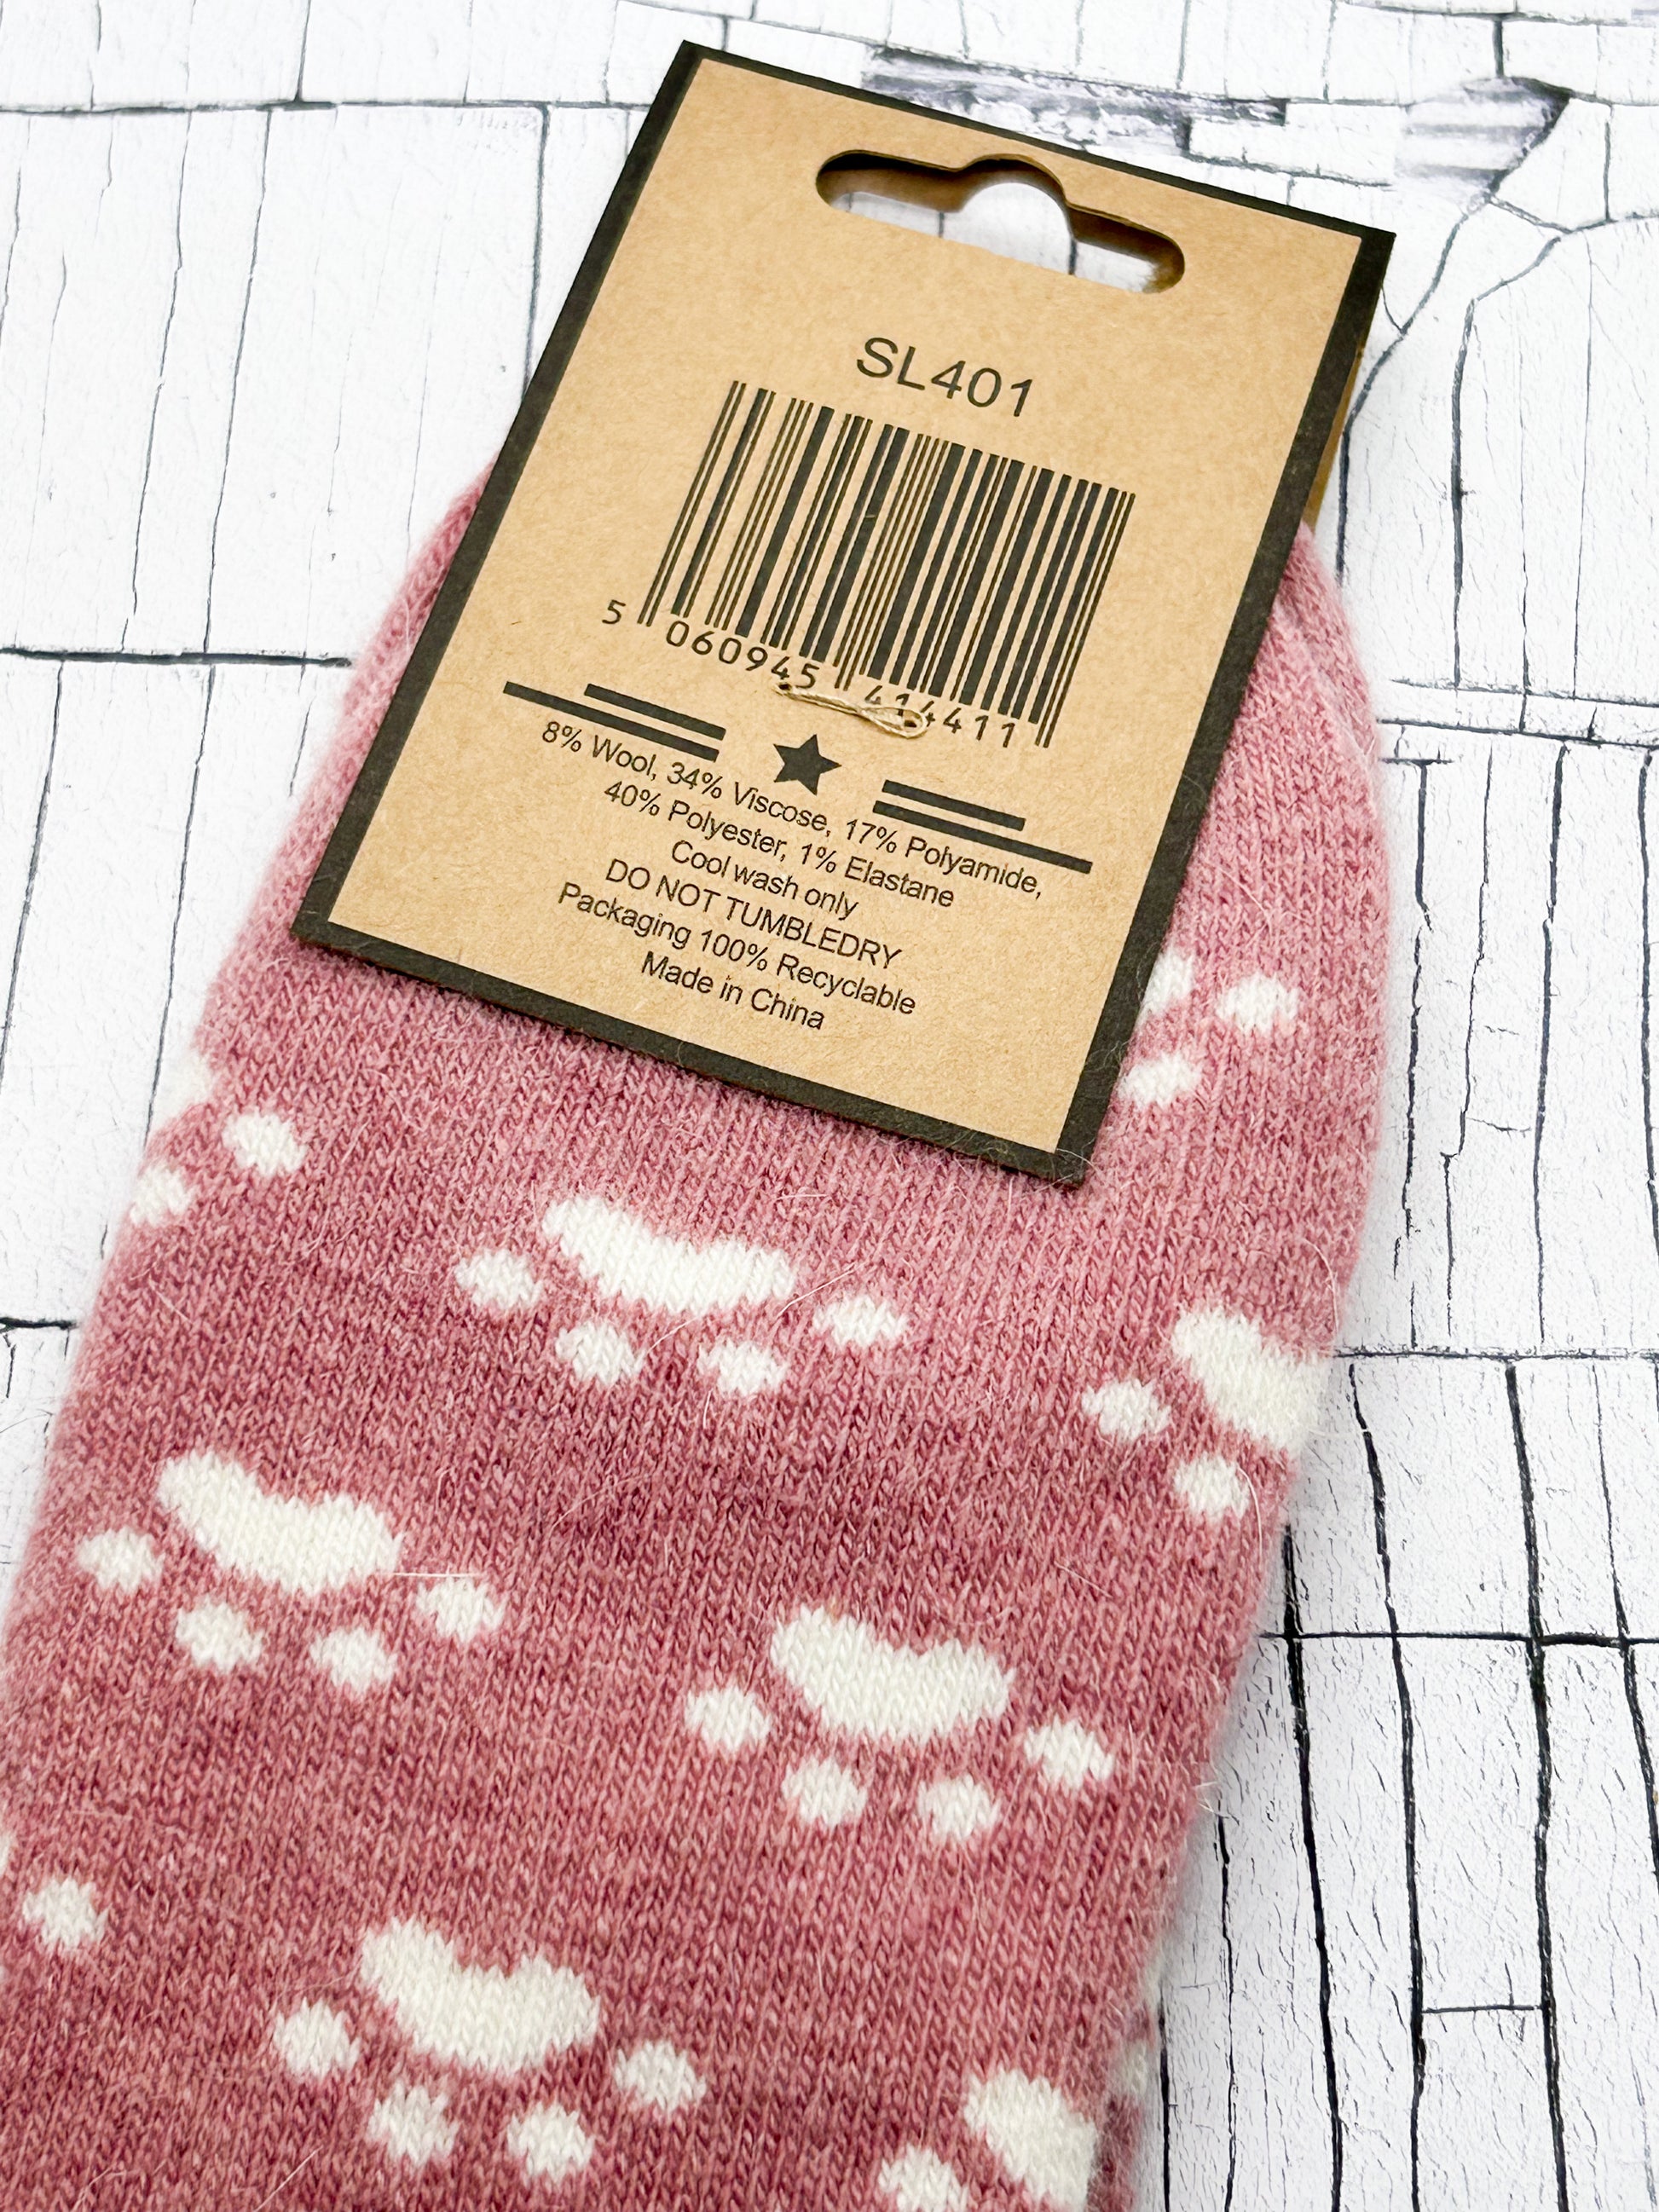 Cuff socks - Eve & Flamingo 